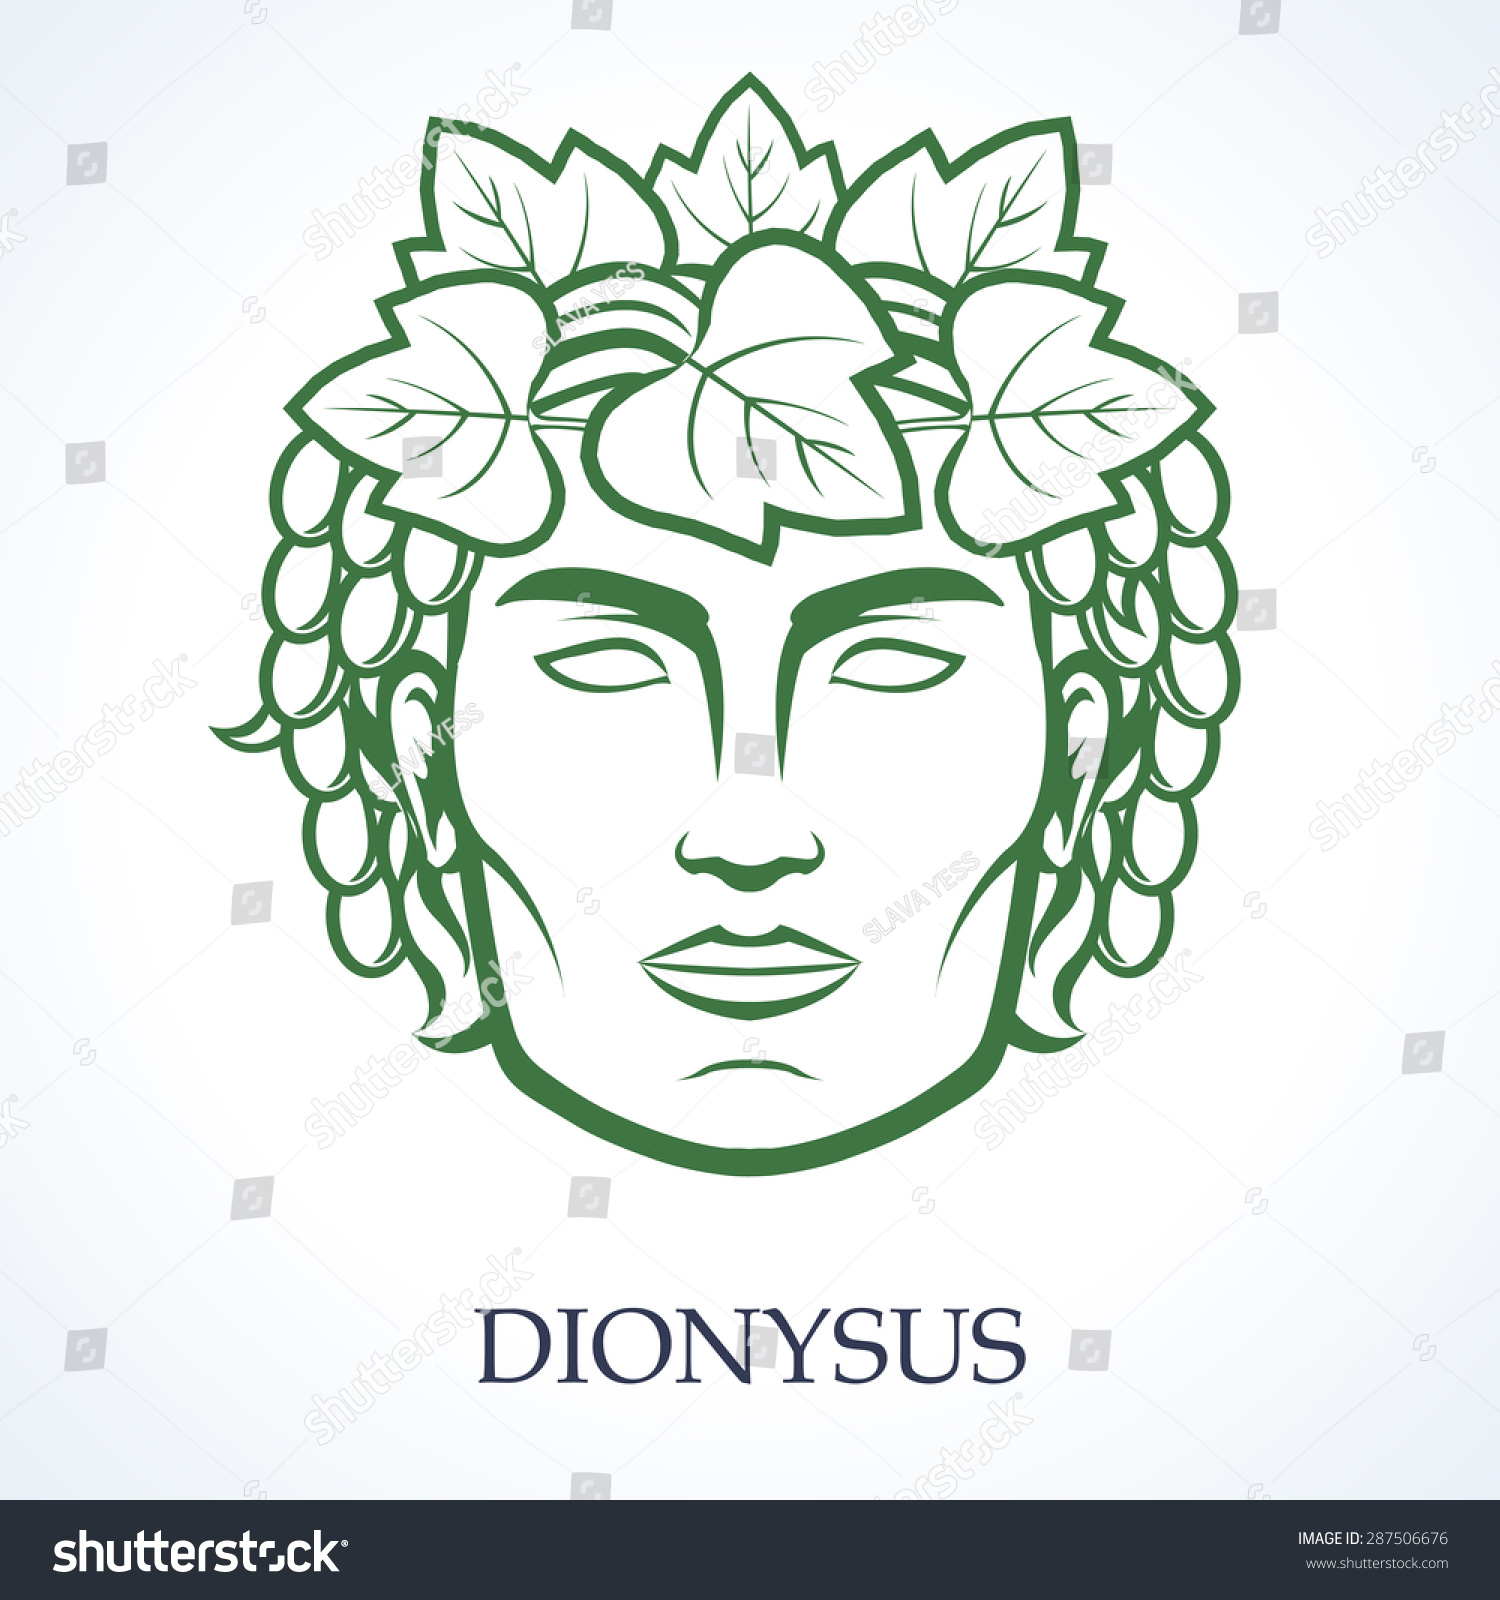 Dionysus Stok Vektör (Telifsiz) 287506676 Shutterstock.